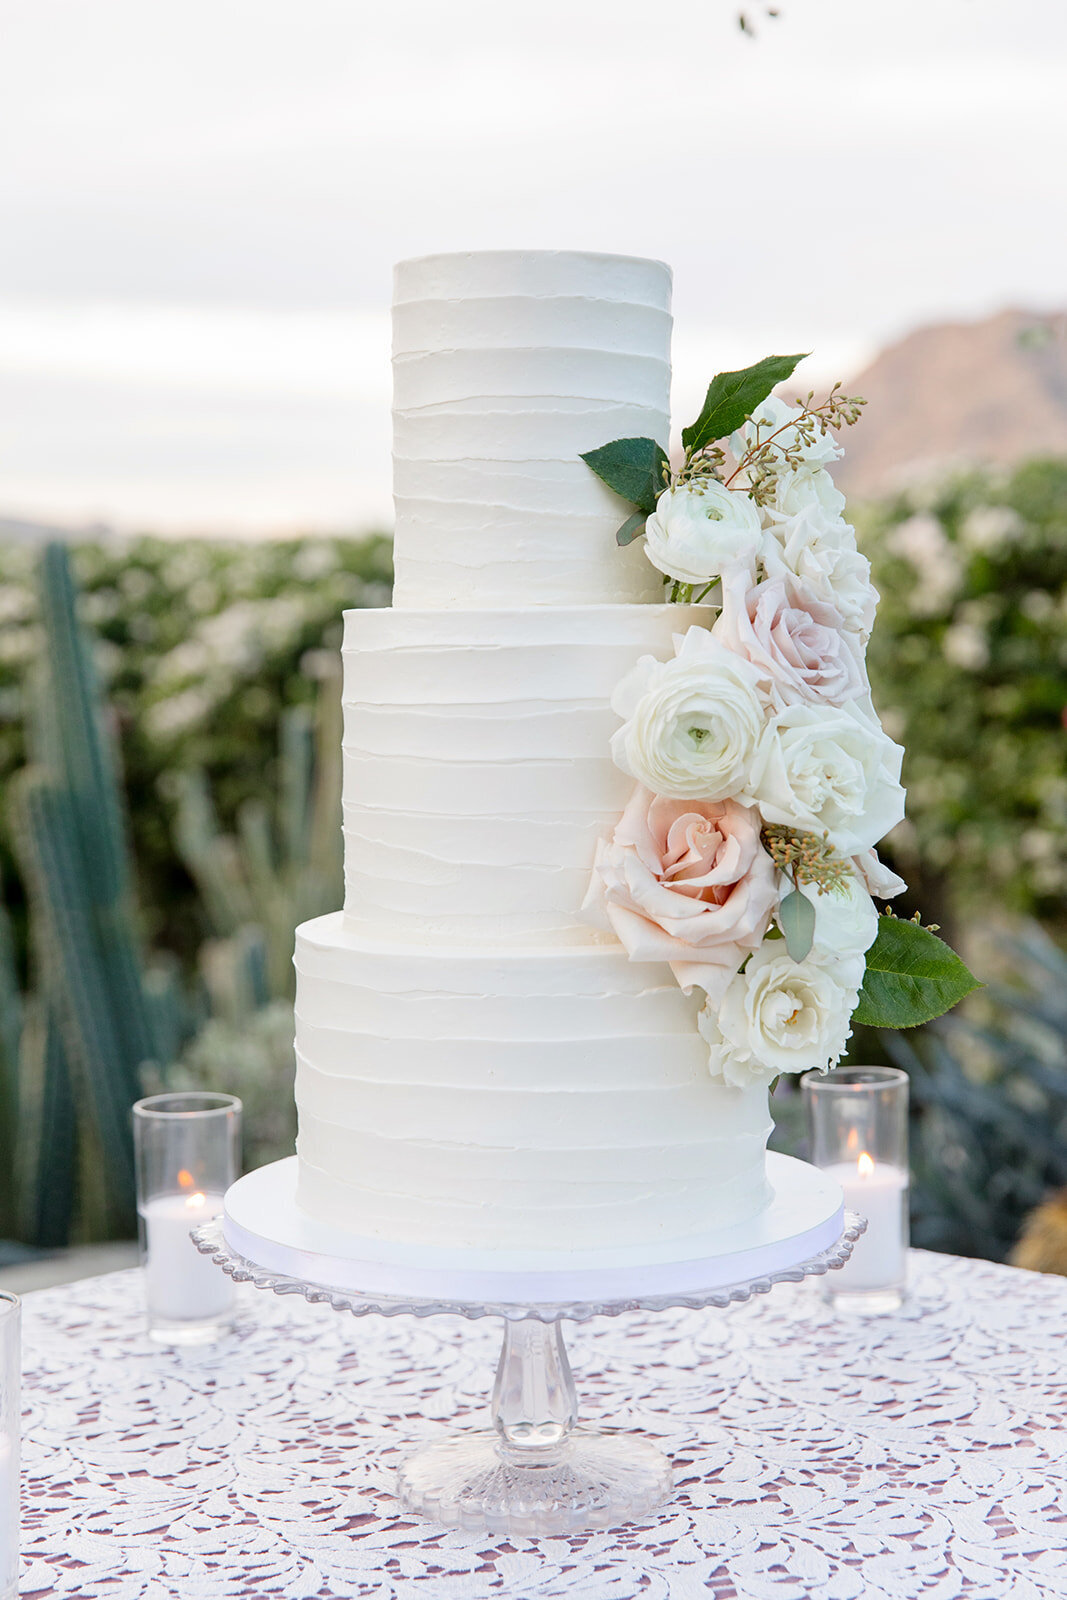 Sanctuary-Wedding-cake